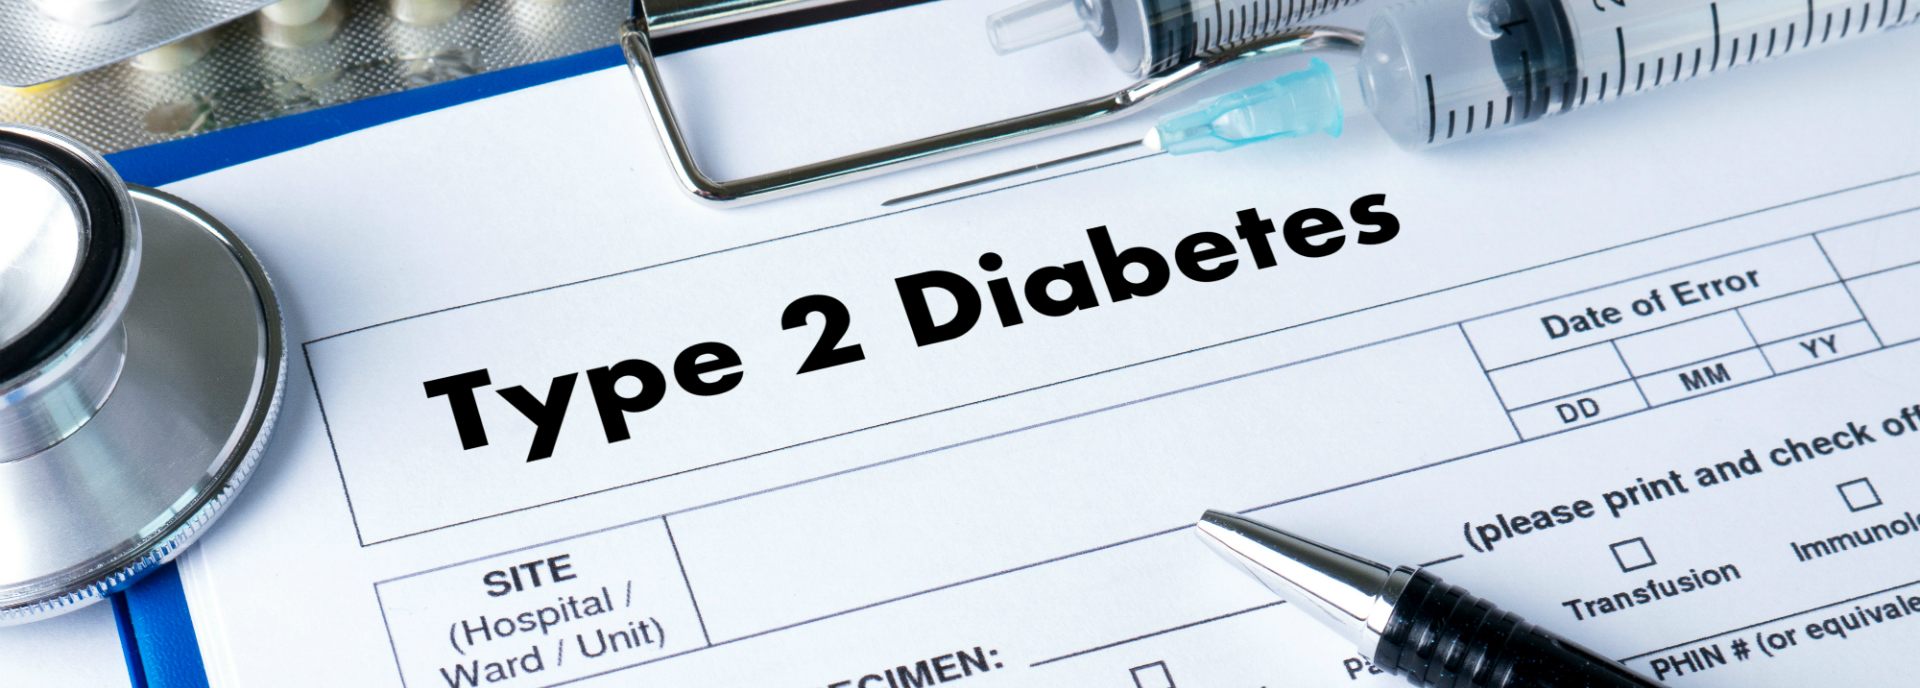 Type 2 Diabetes banner